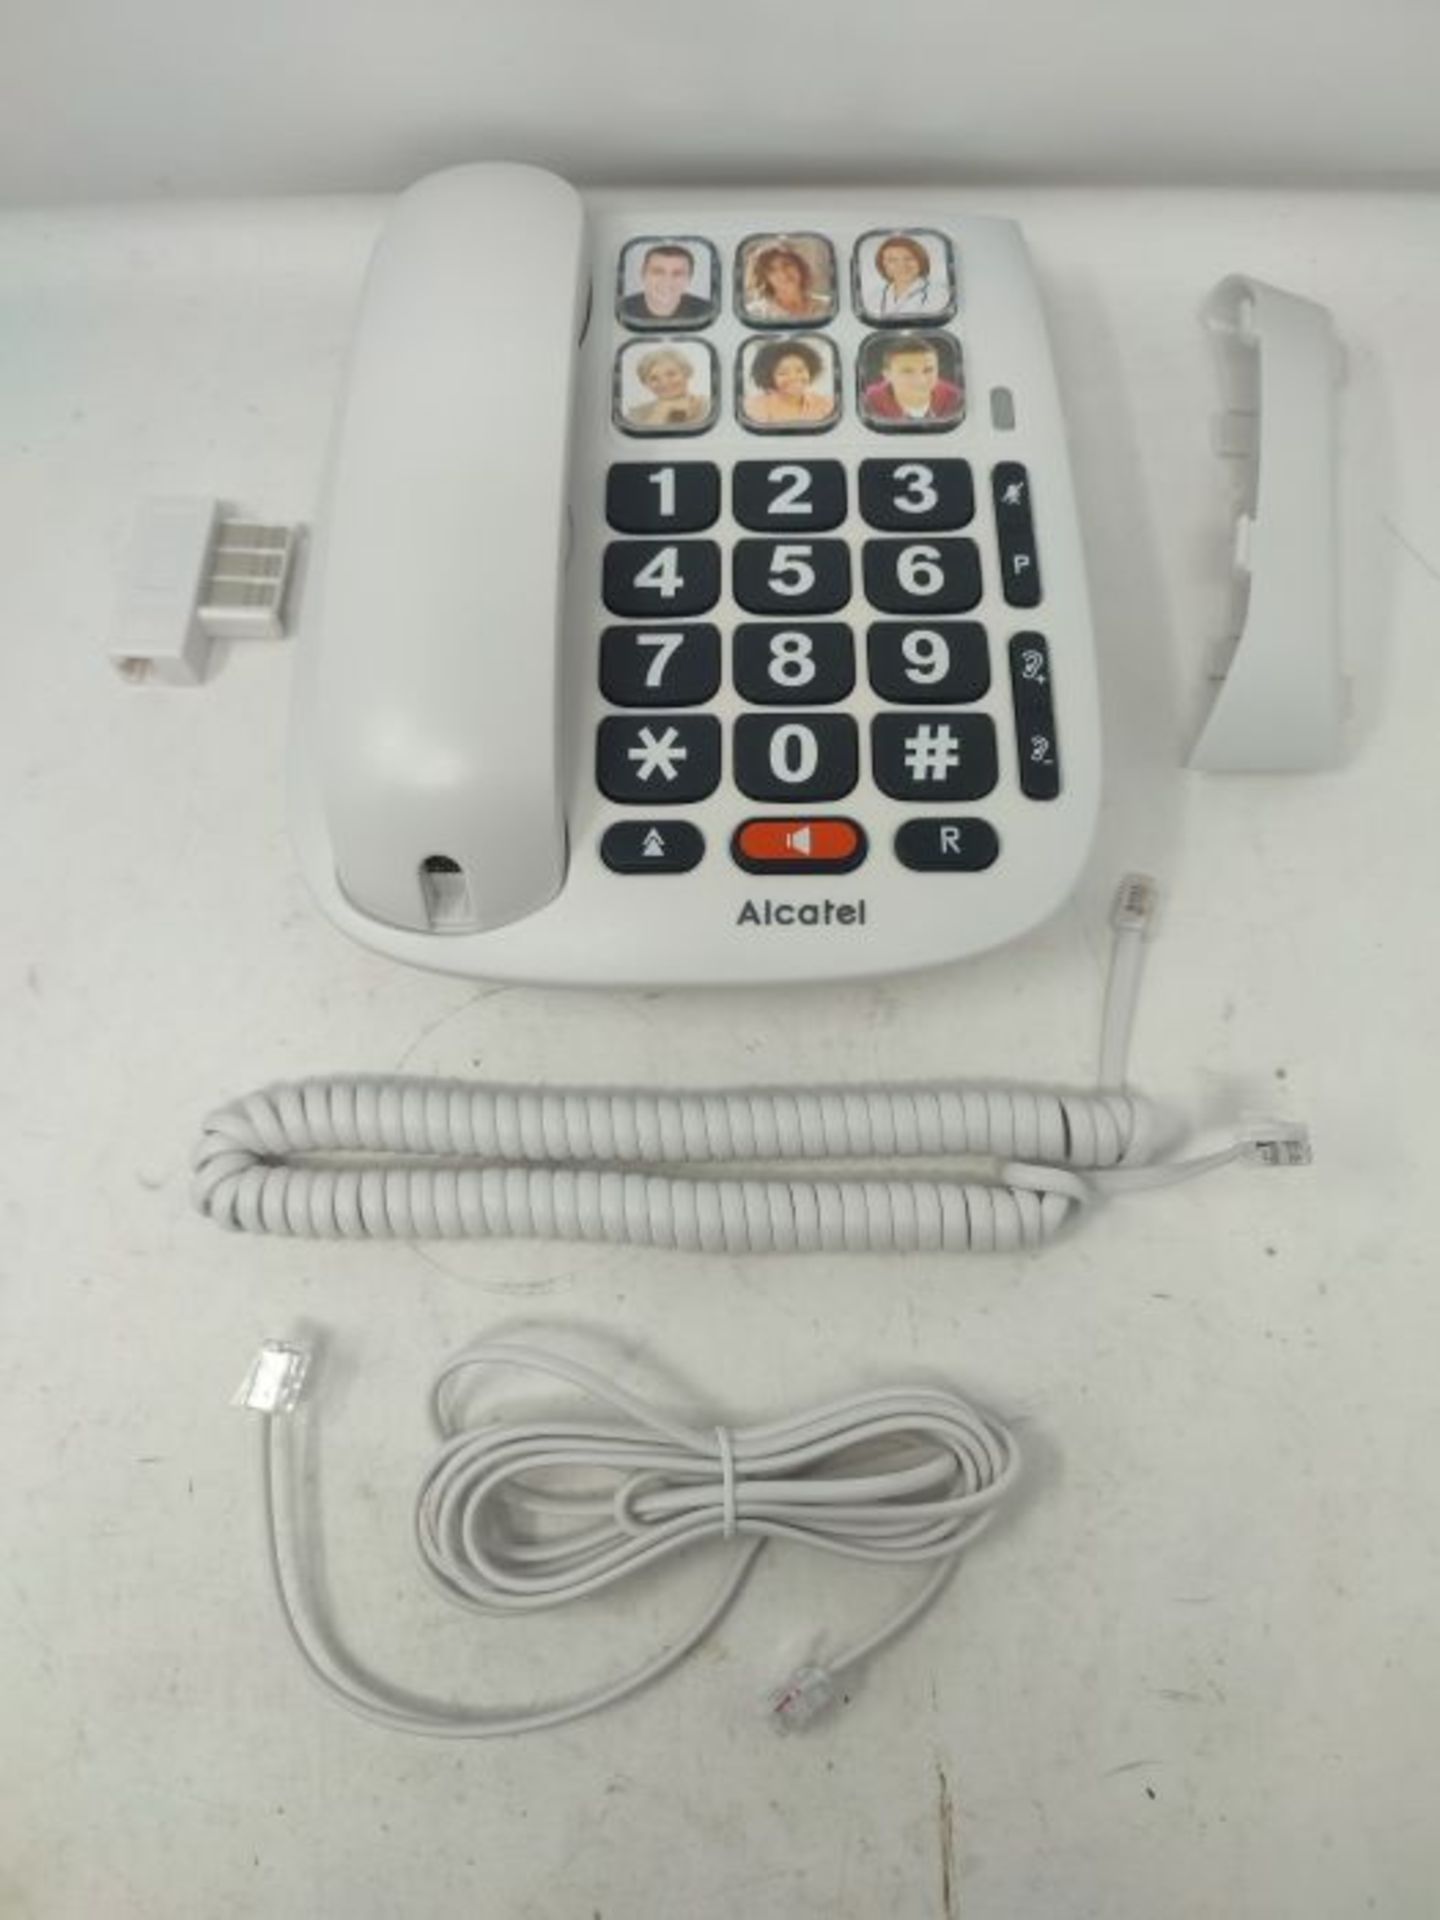 Alcatel Max 10 Corded Phone for Seniors White. - Image 3 of 6